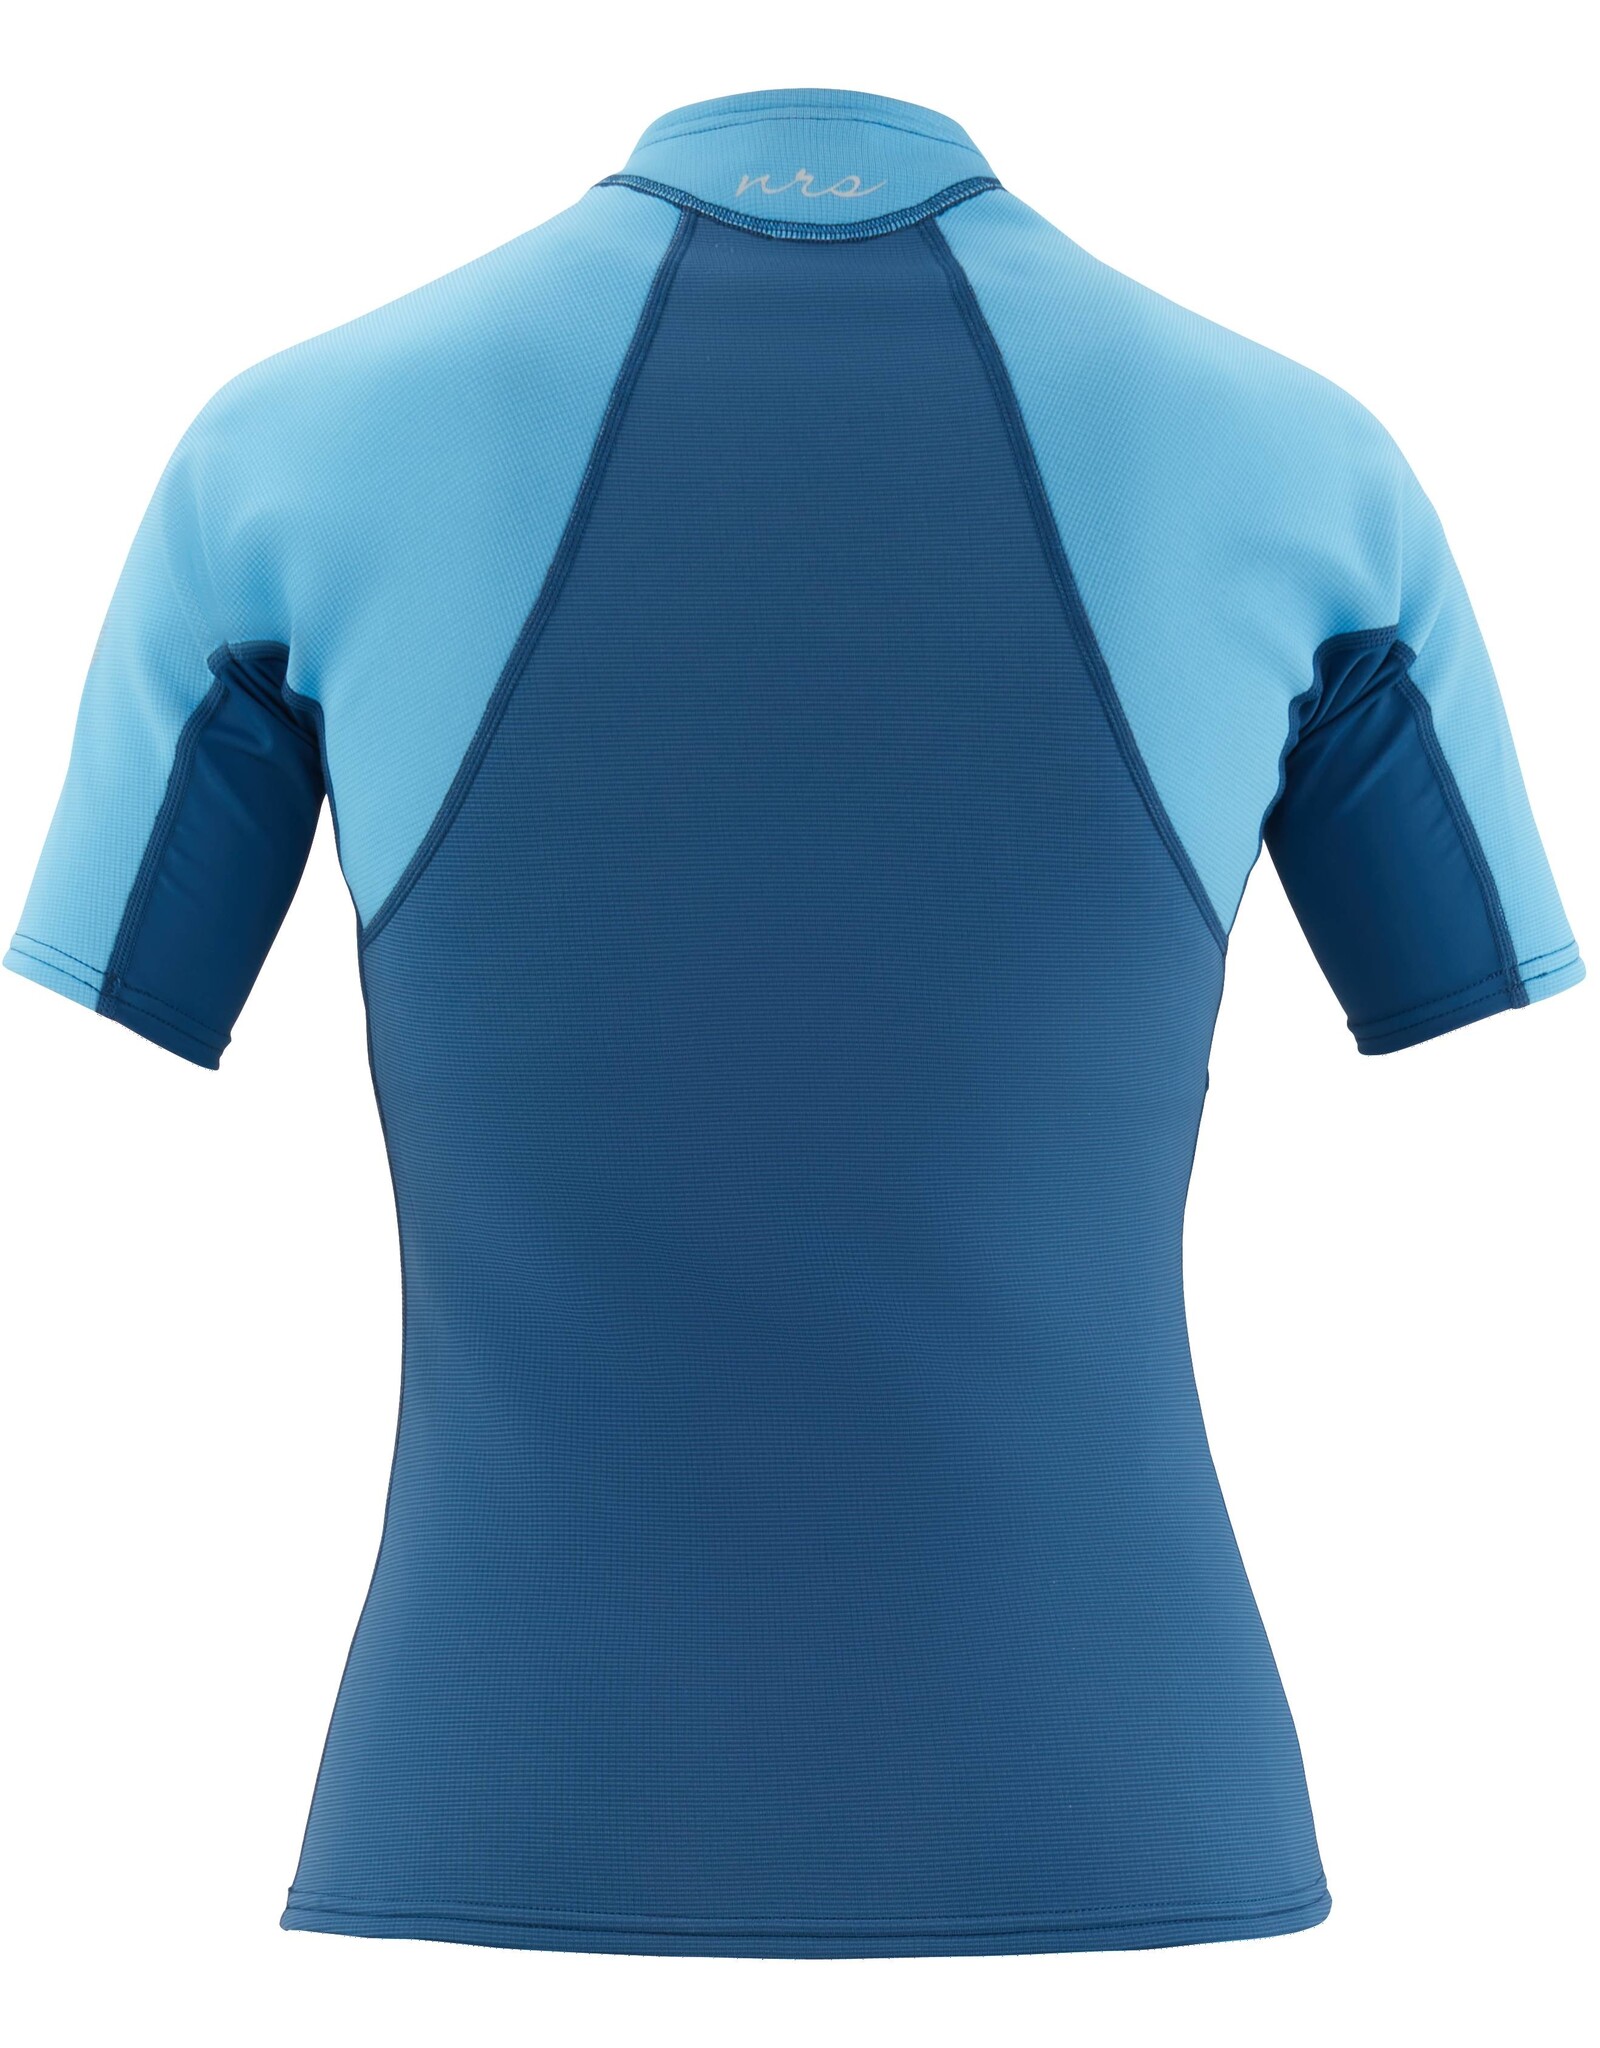 NRS NRS Women's HydroSkin 0.5 Short-Sleeve Shirt